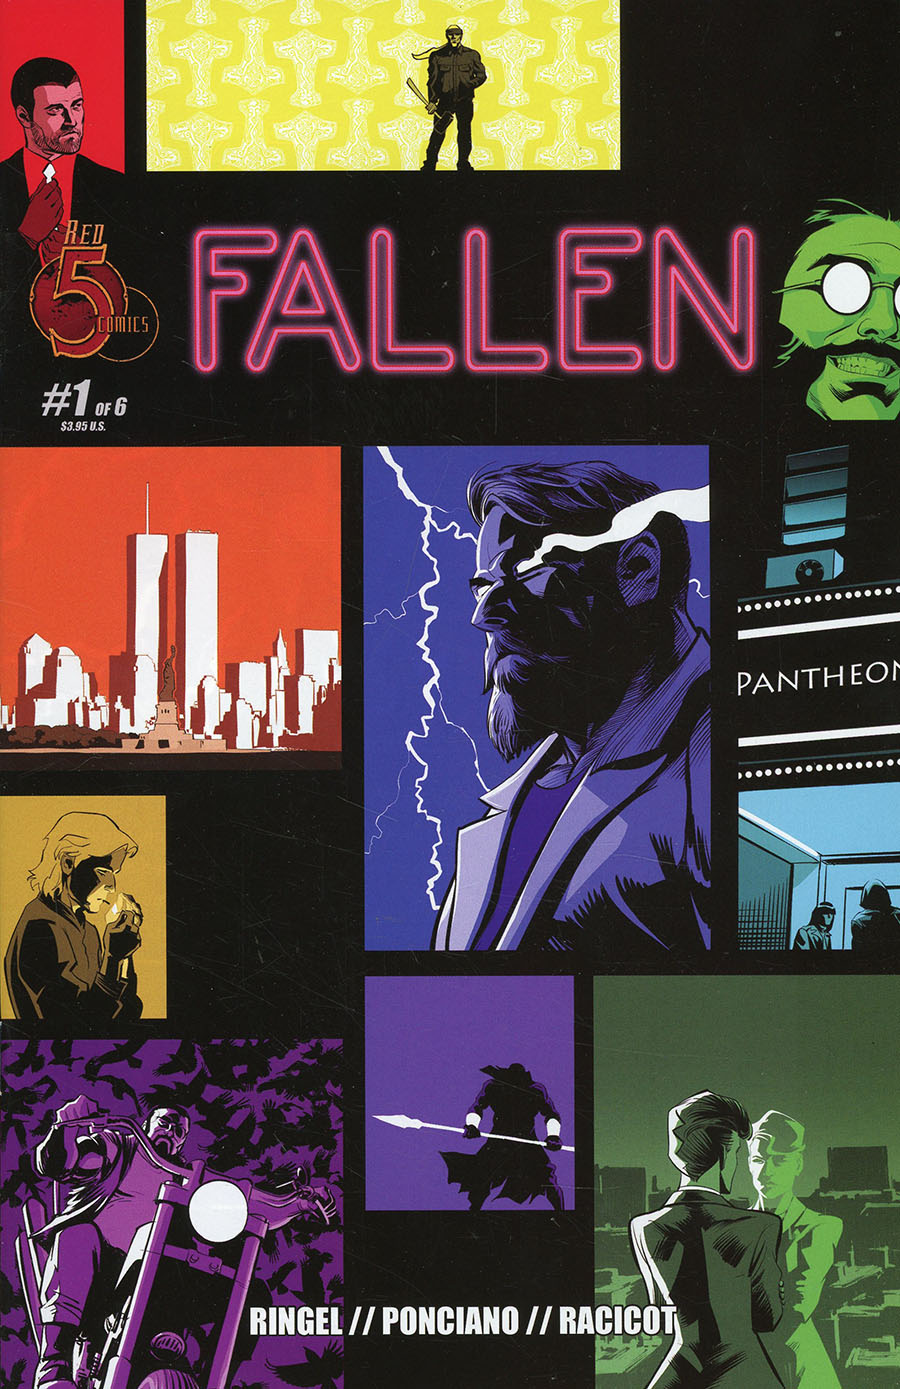 Fallen (Red 5 Comics) #1